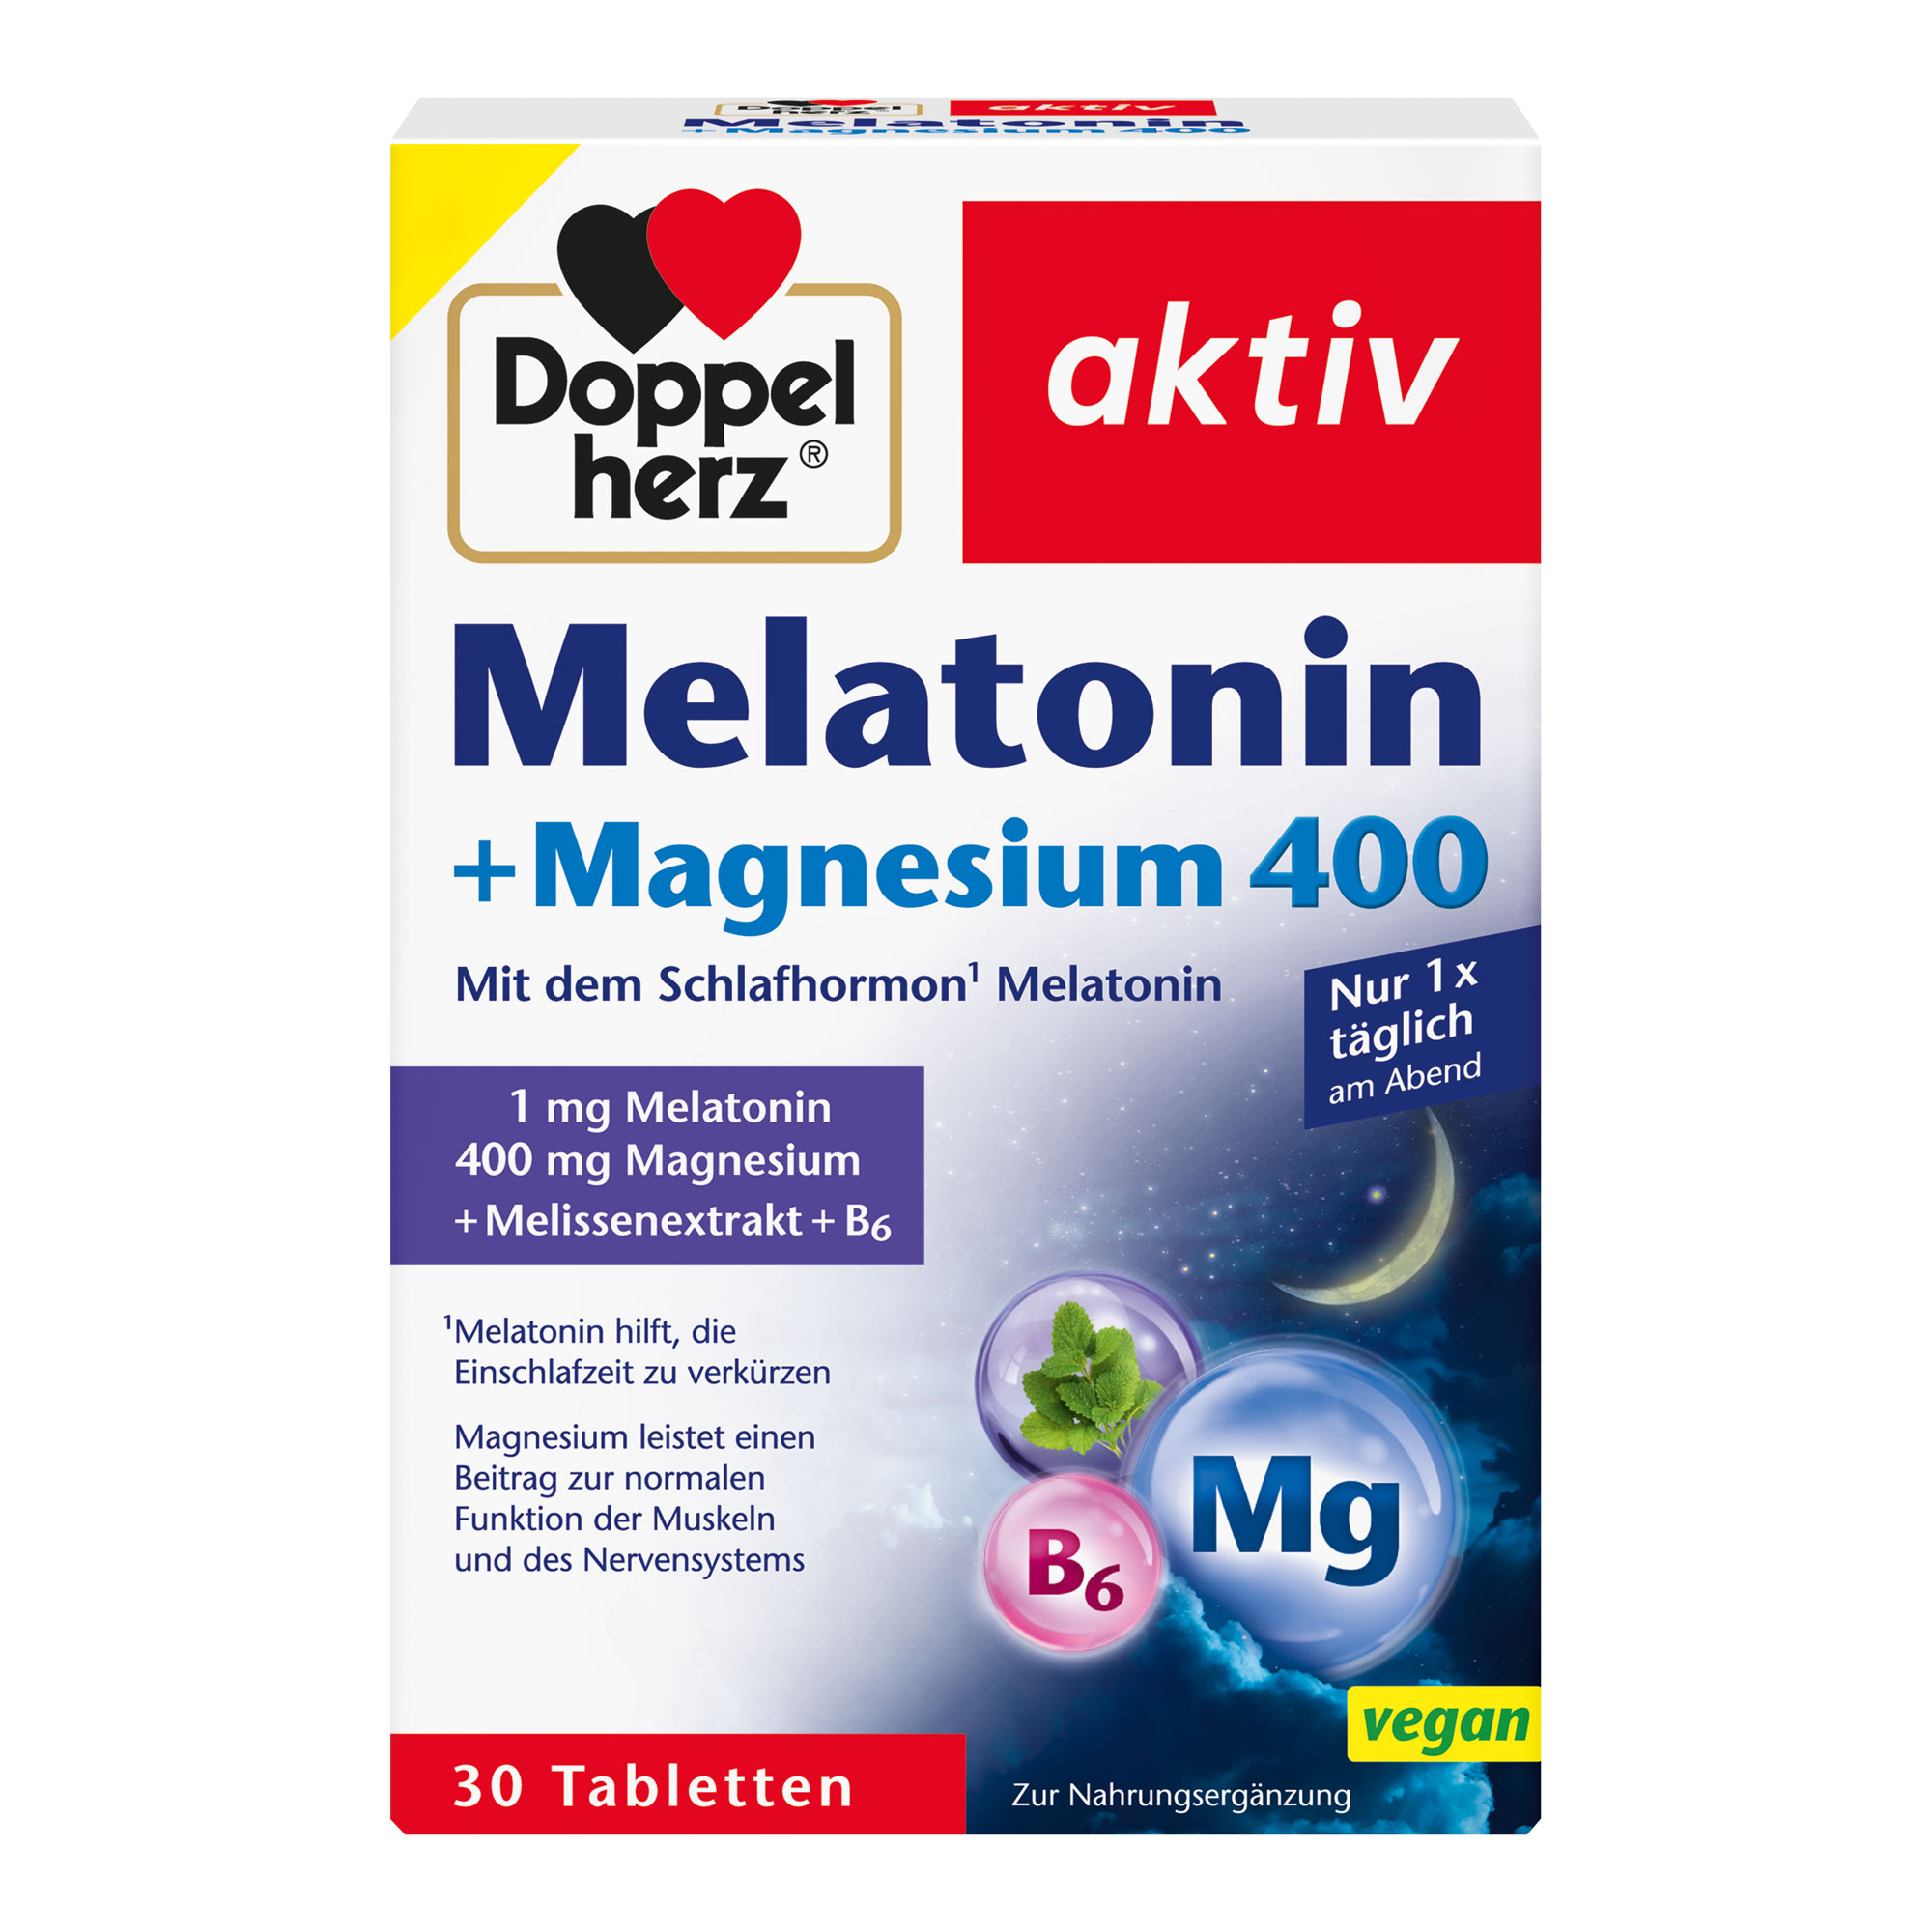 Nahrungsergänzungsmittel mit Melatonin, Magnesium, Melissenblätterextrakt und Vitamin B6.